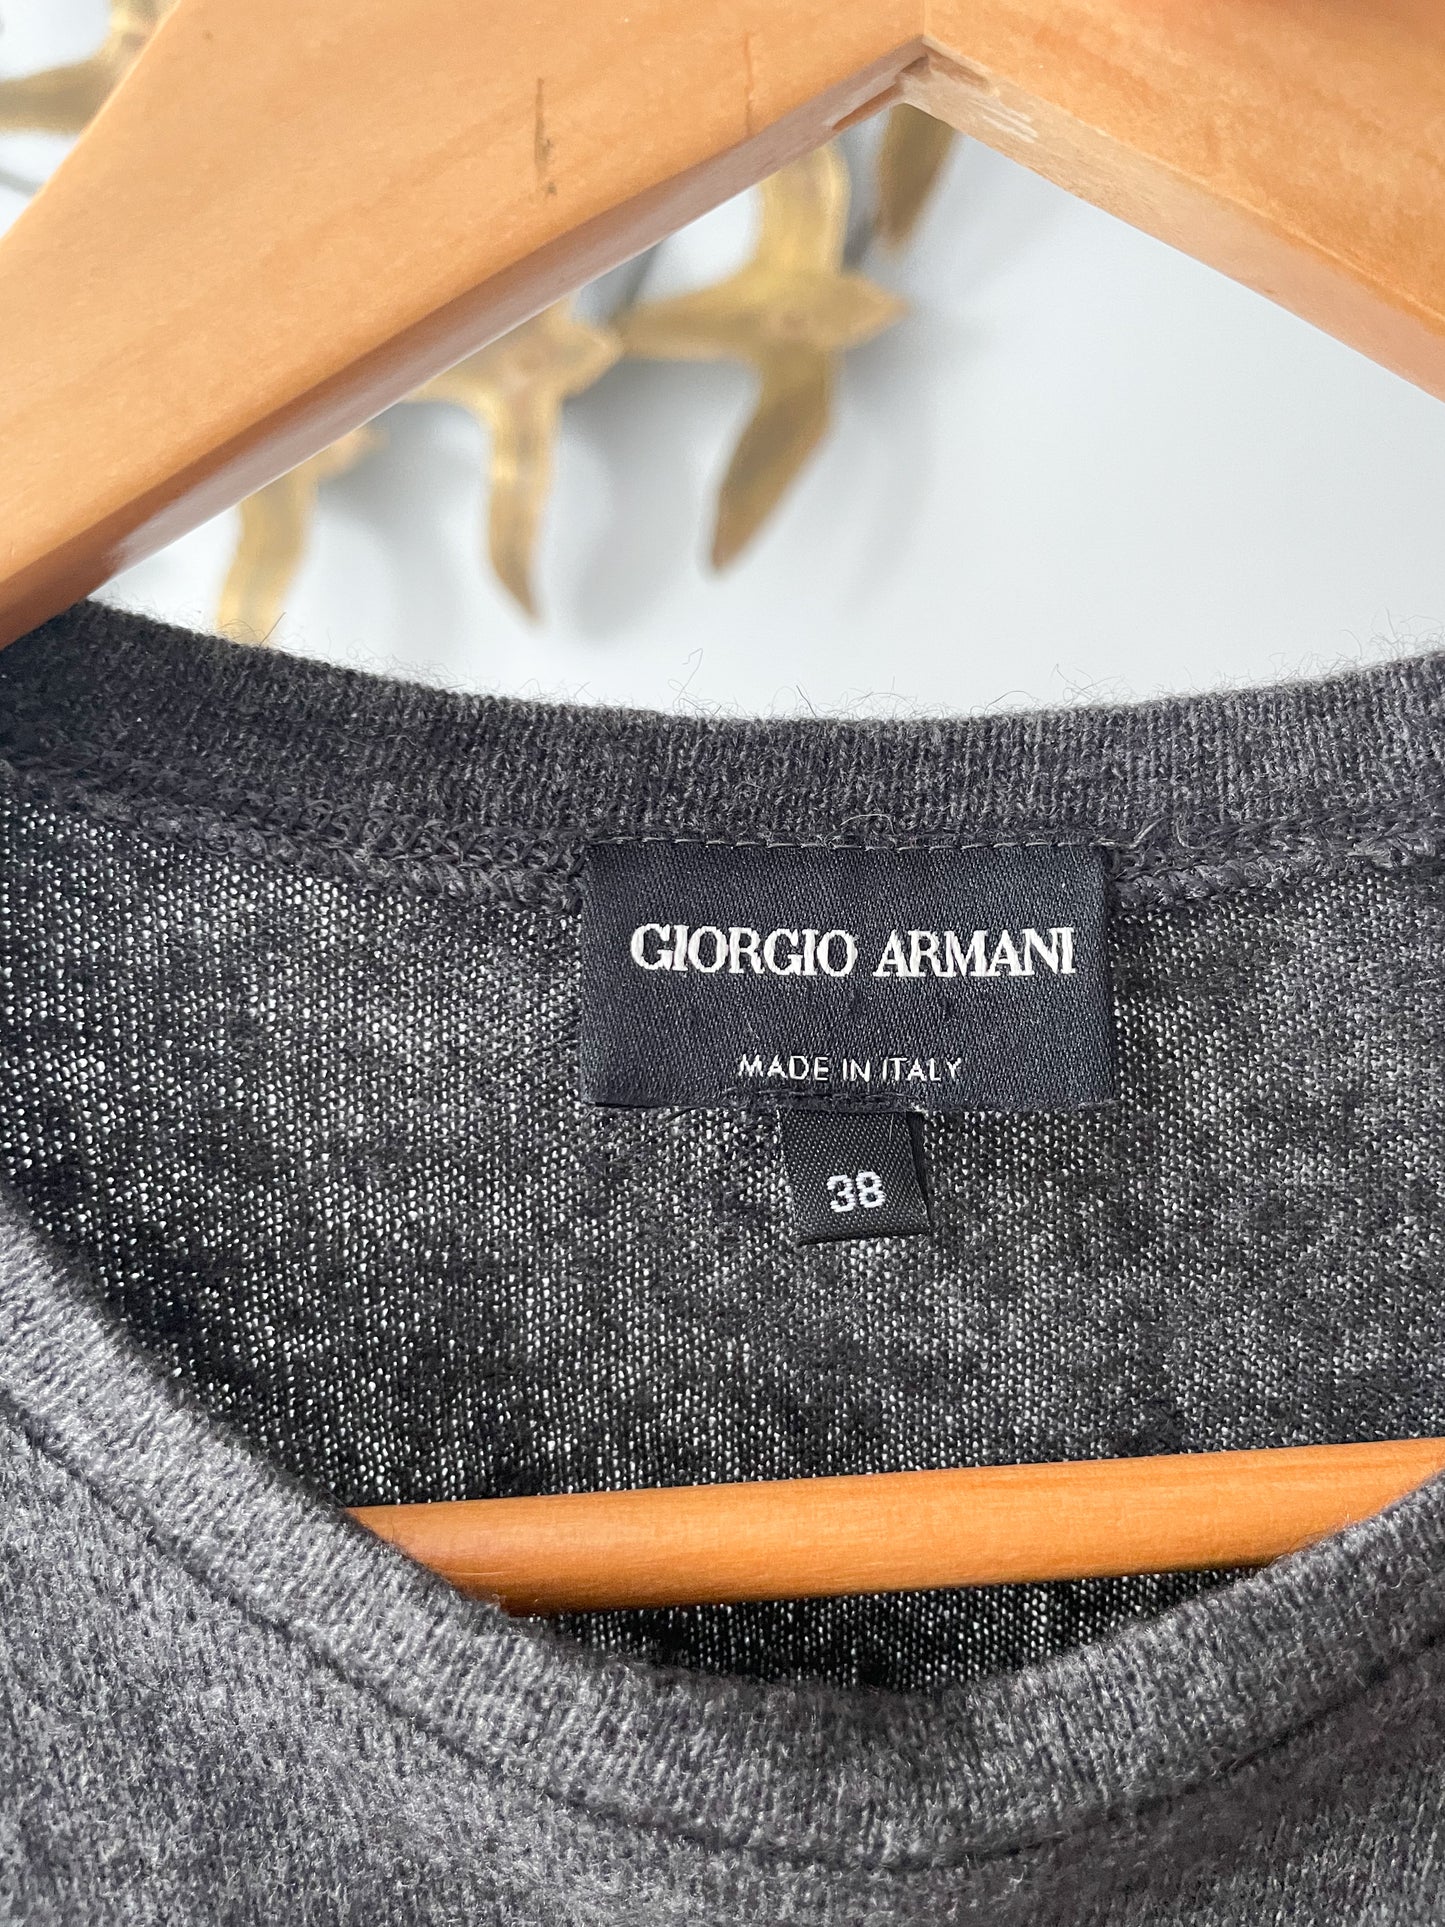 Giorgio Armani Grey Wool Blend Cropped Short Sleeves Jumper T-Shirt - XS/S